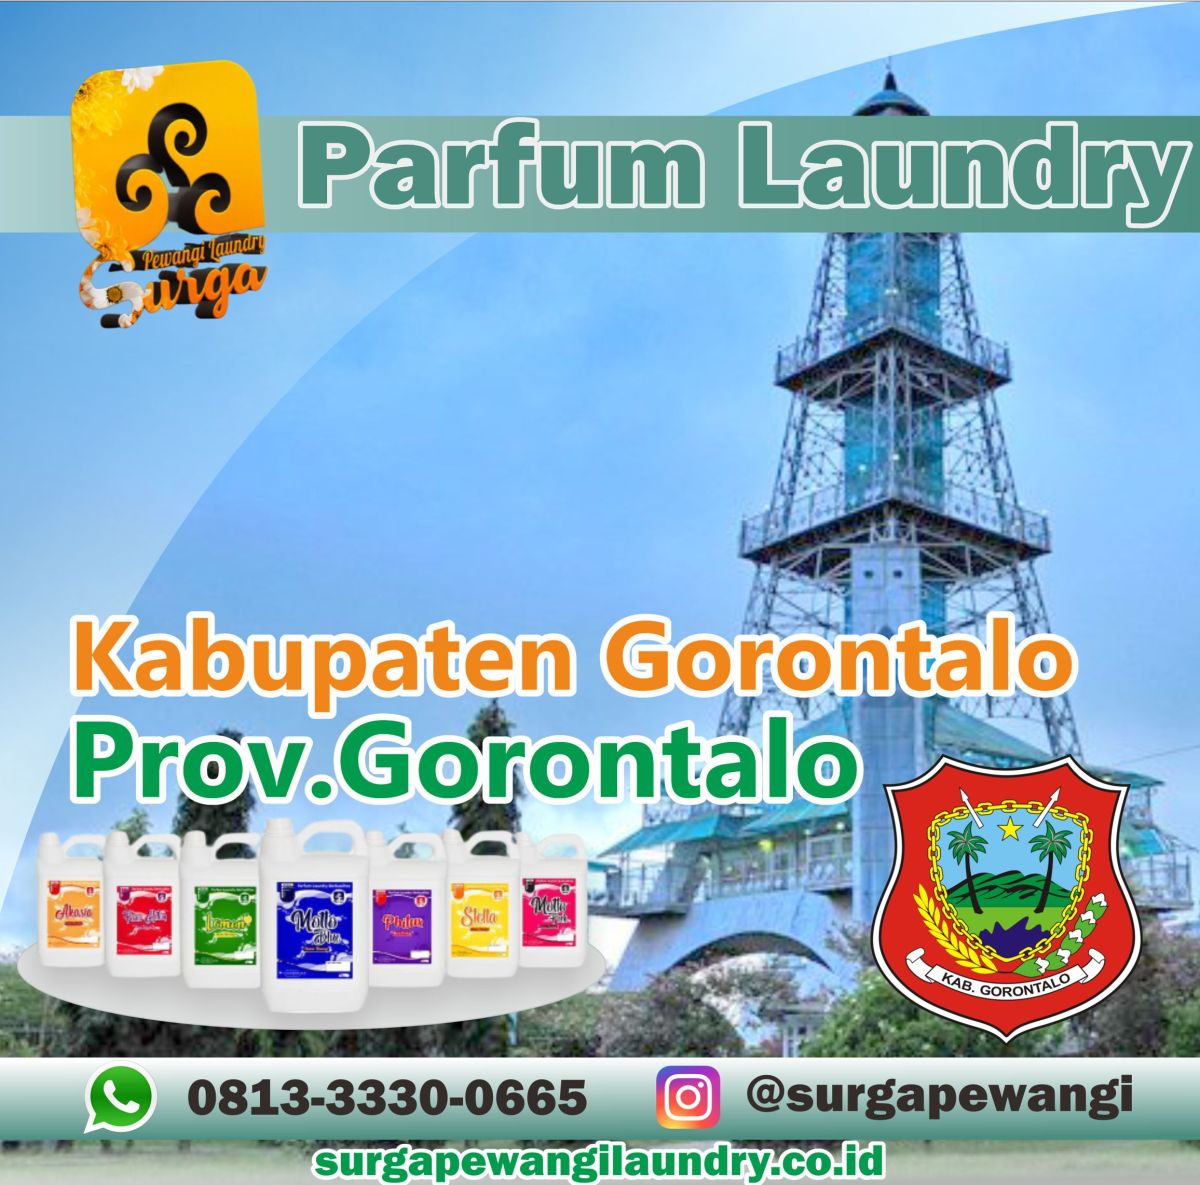 Parfum Laundry Kabupaten Gorontalo, Gorontalo